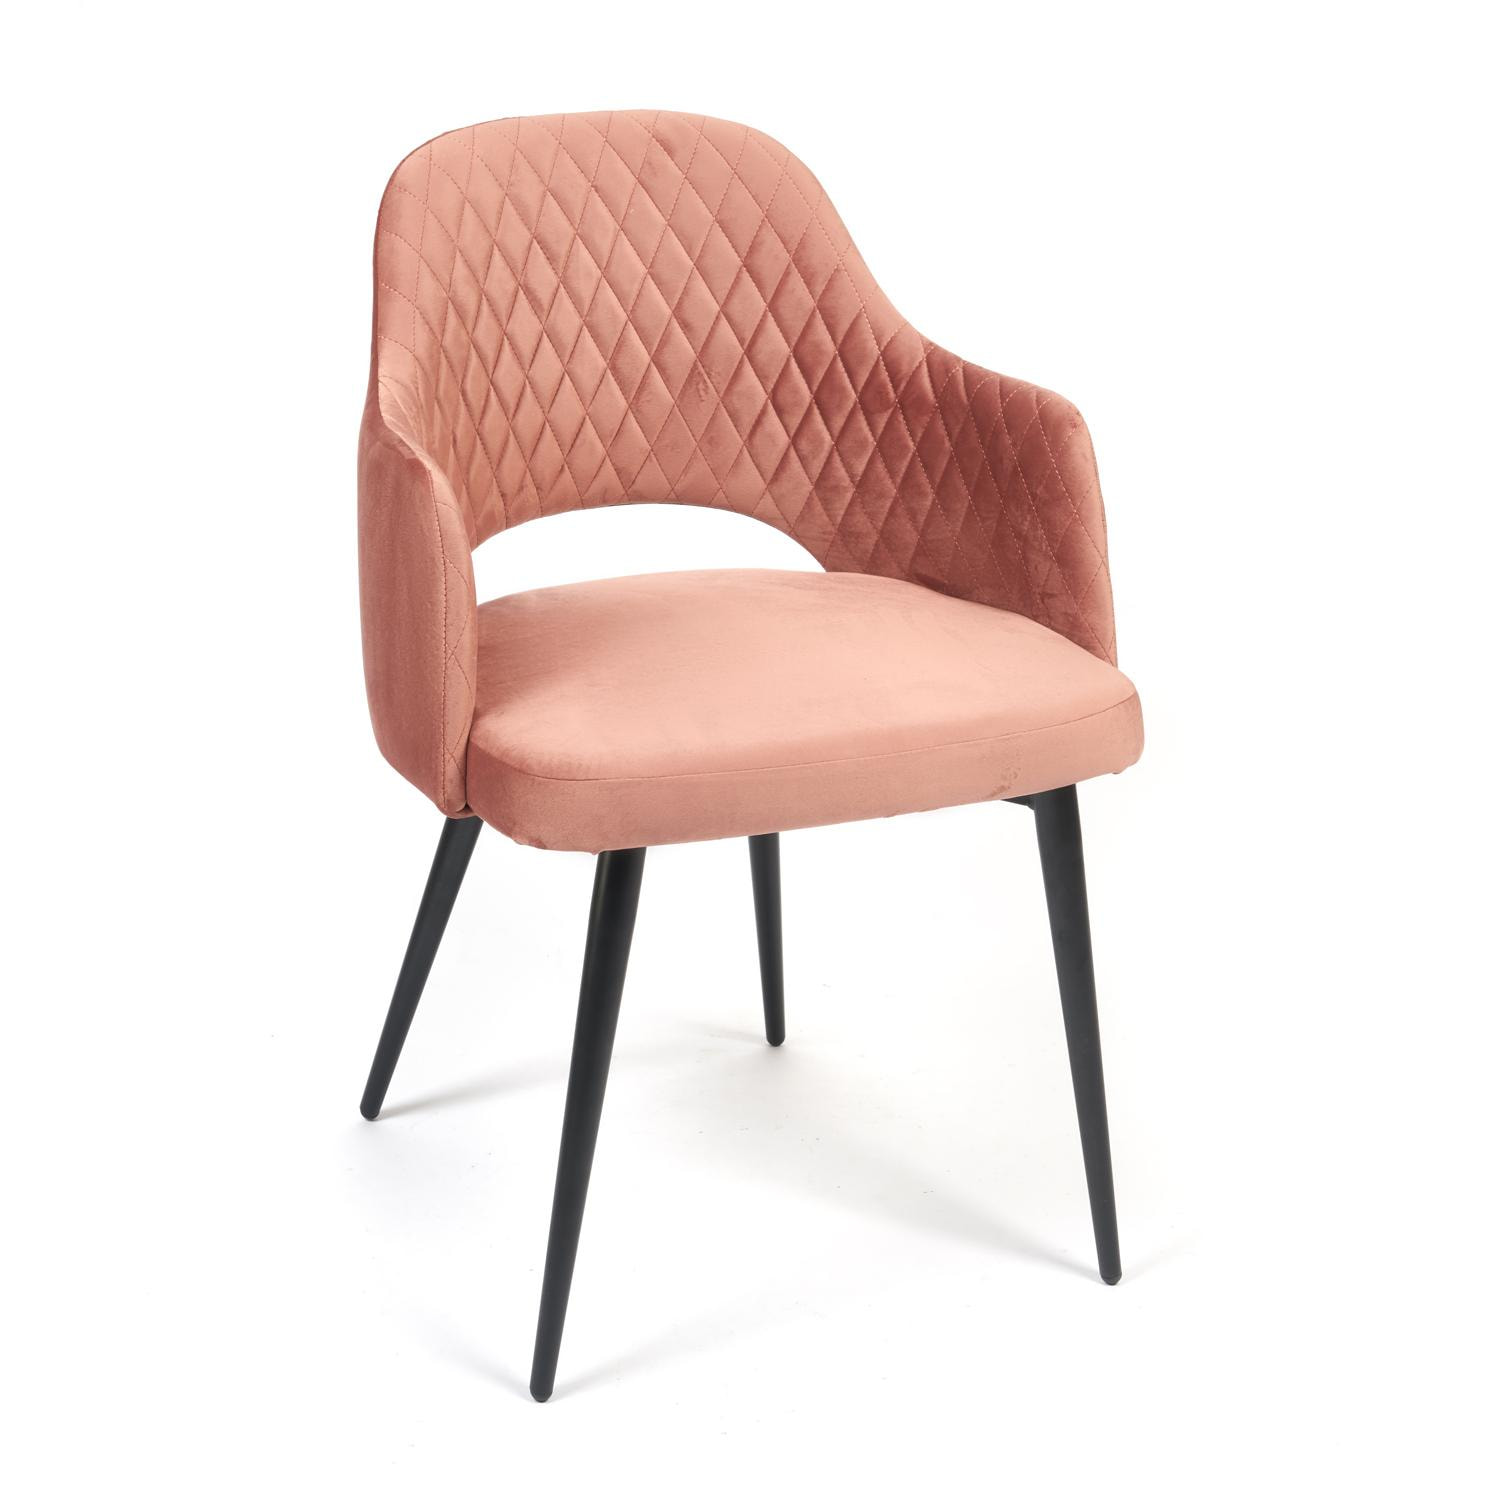 кресло тс pink розовое 20236 Кресло ТС 55х55х80 см коралловый